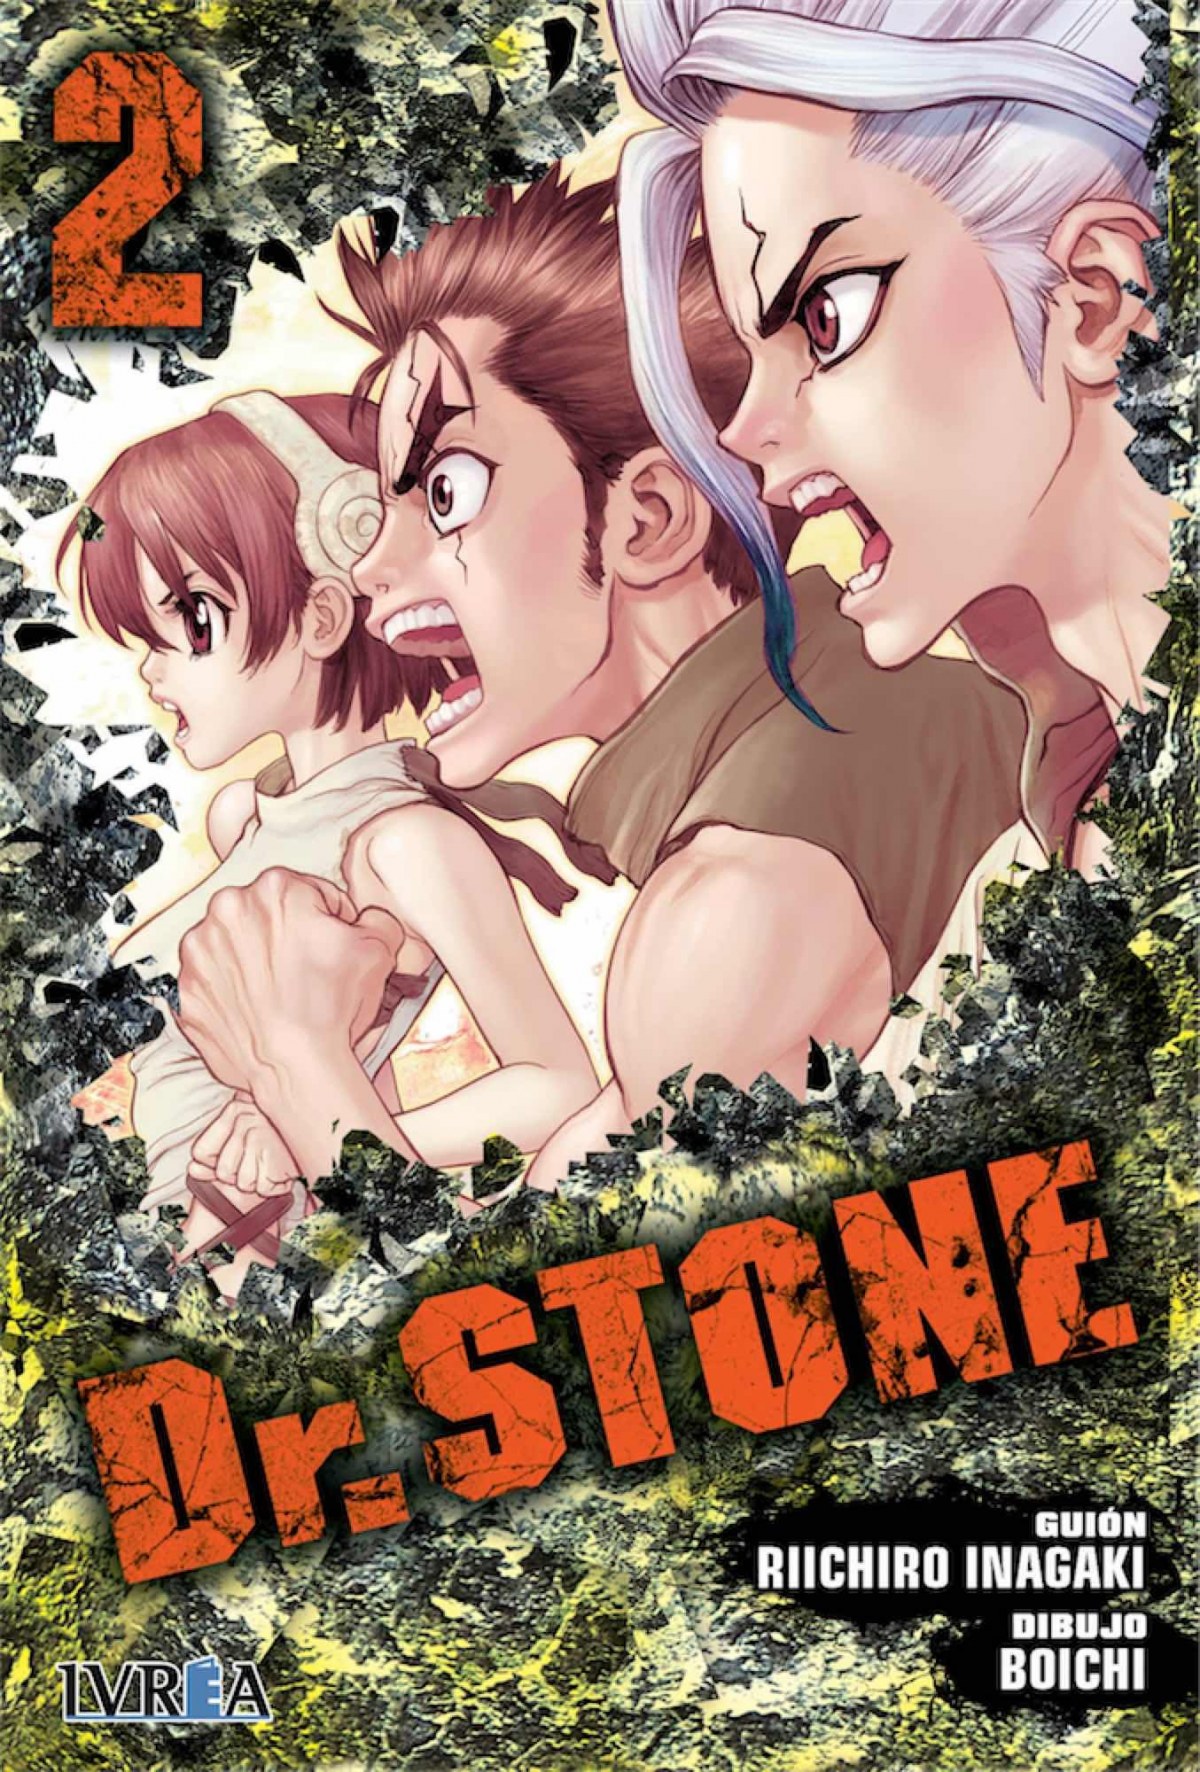 Dr. Stone Vol. 4